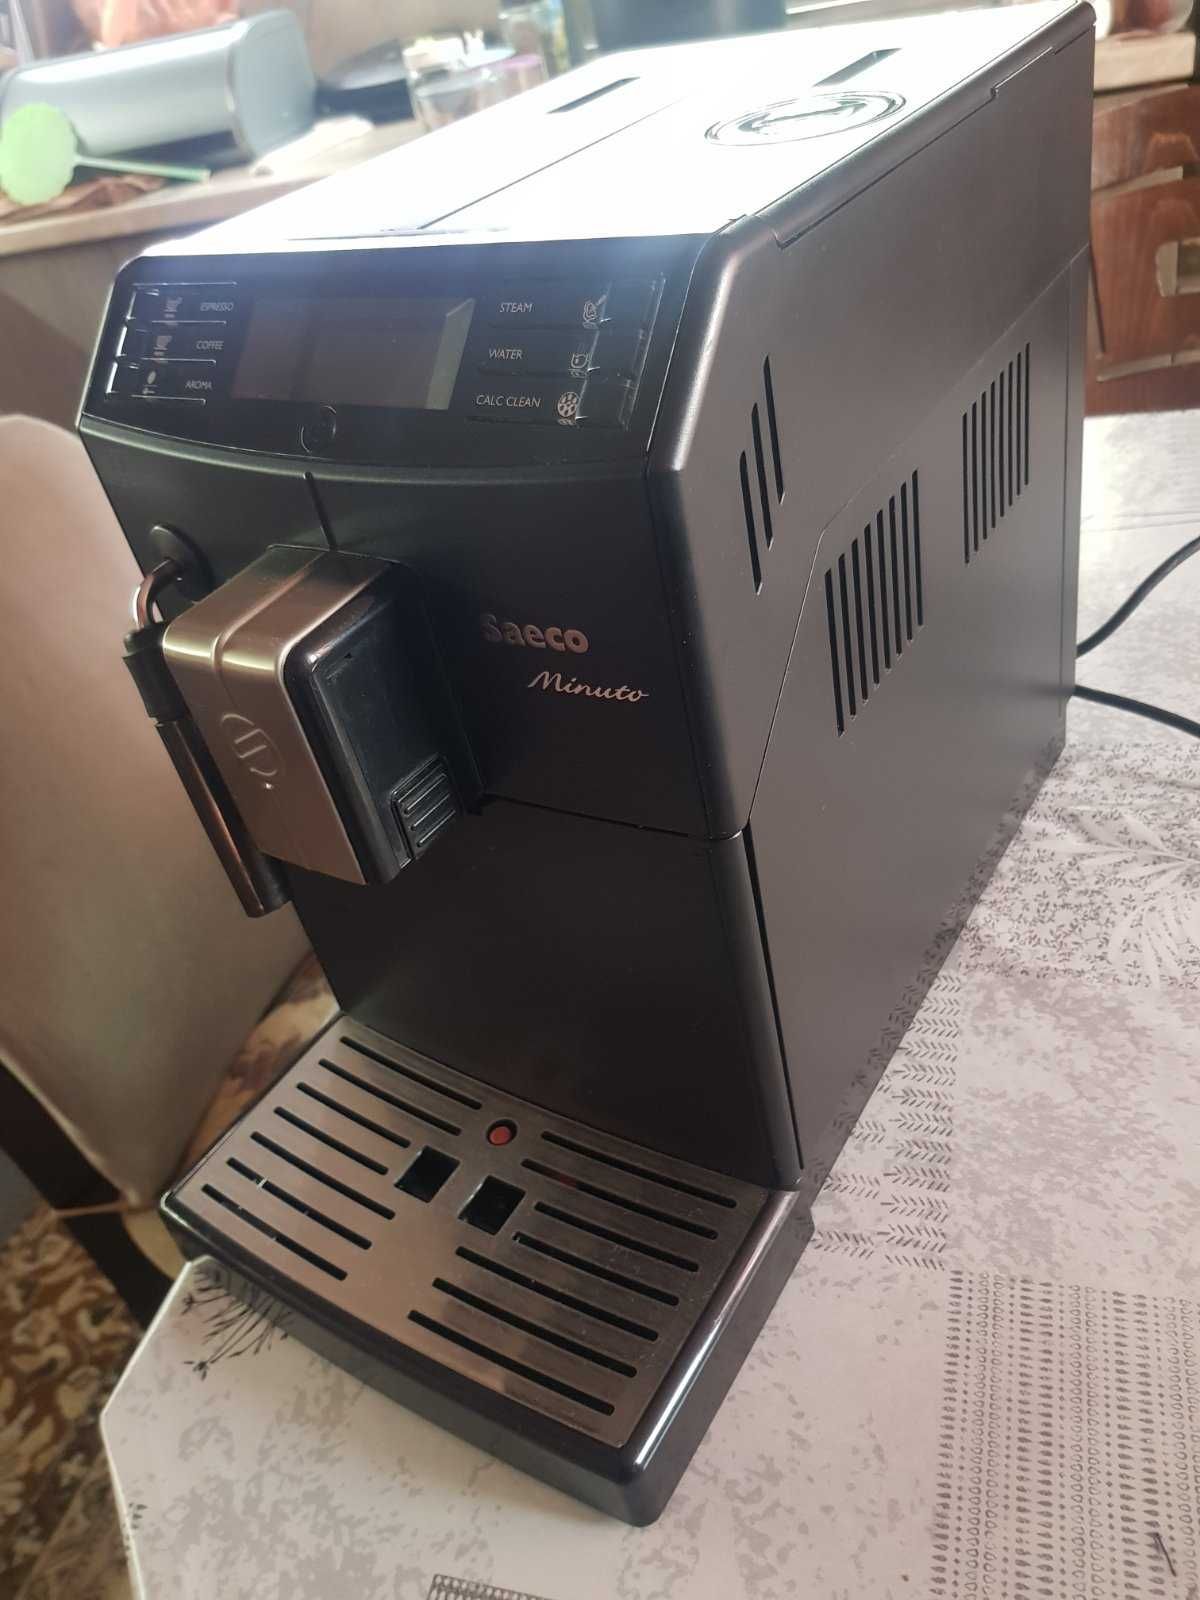 Кафе автомат Saeco Minuto